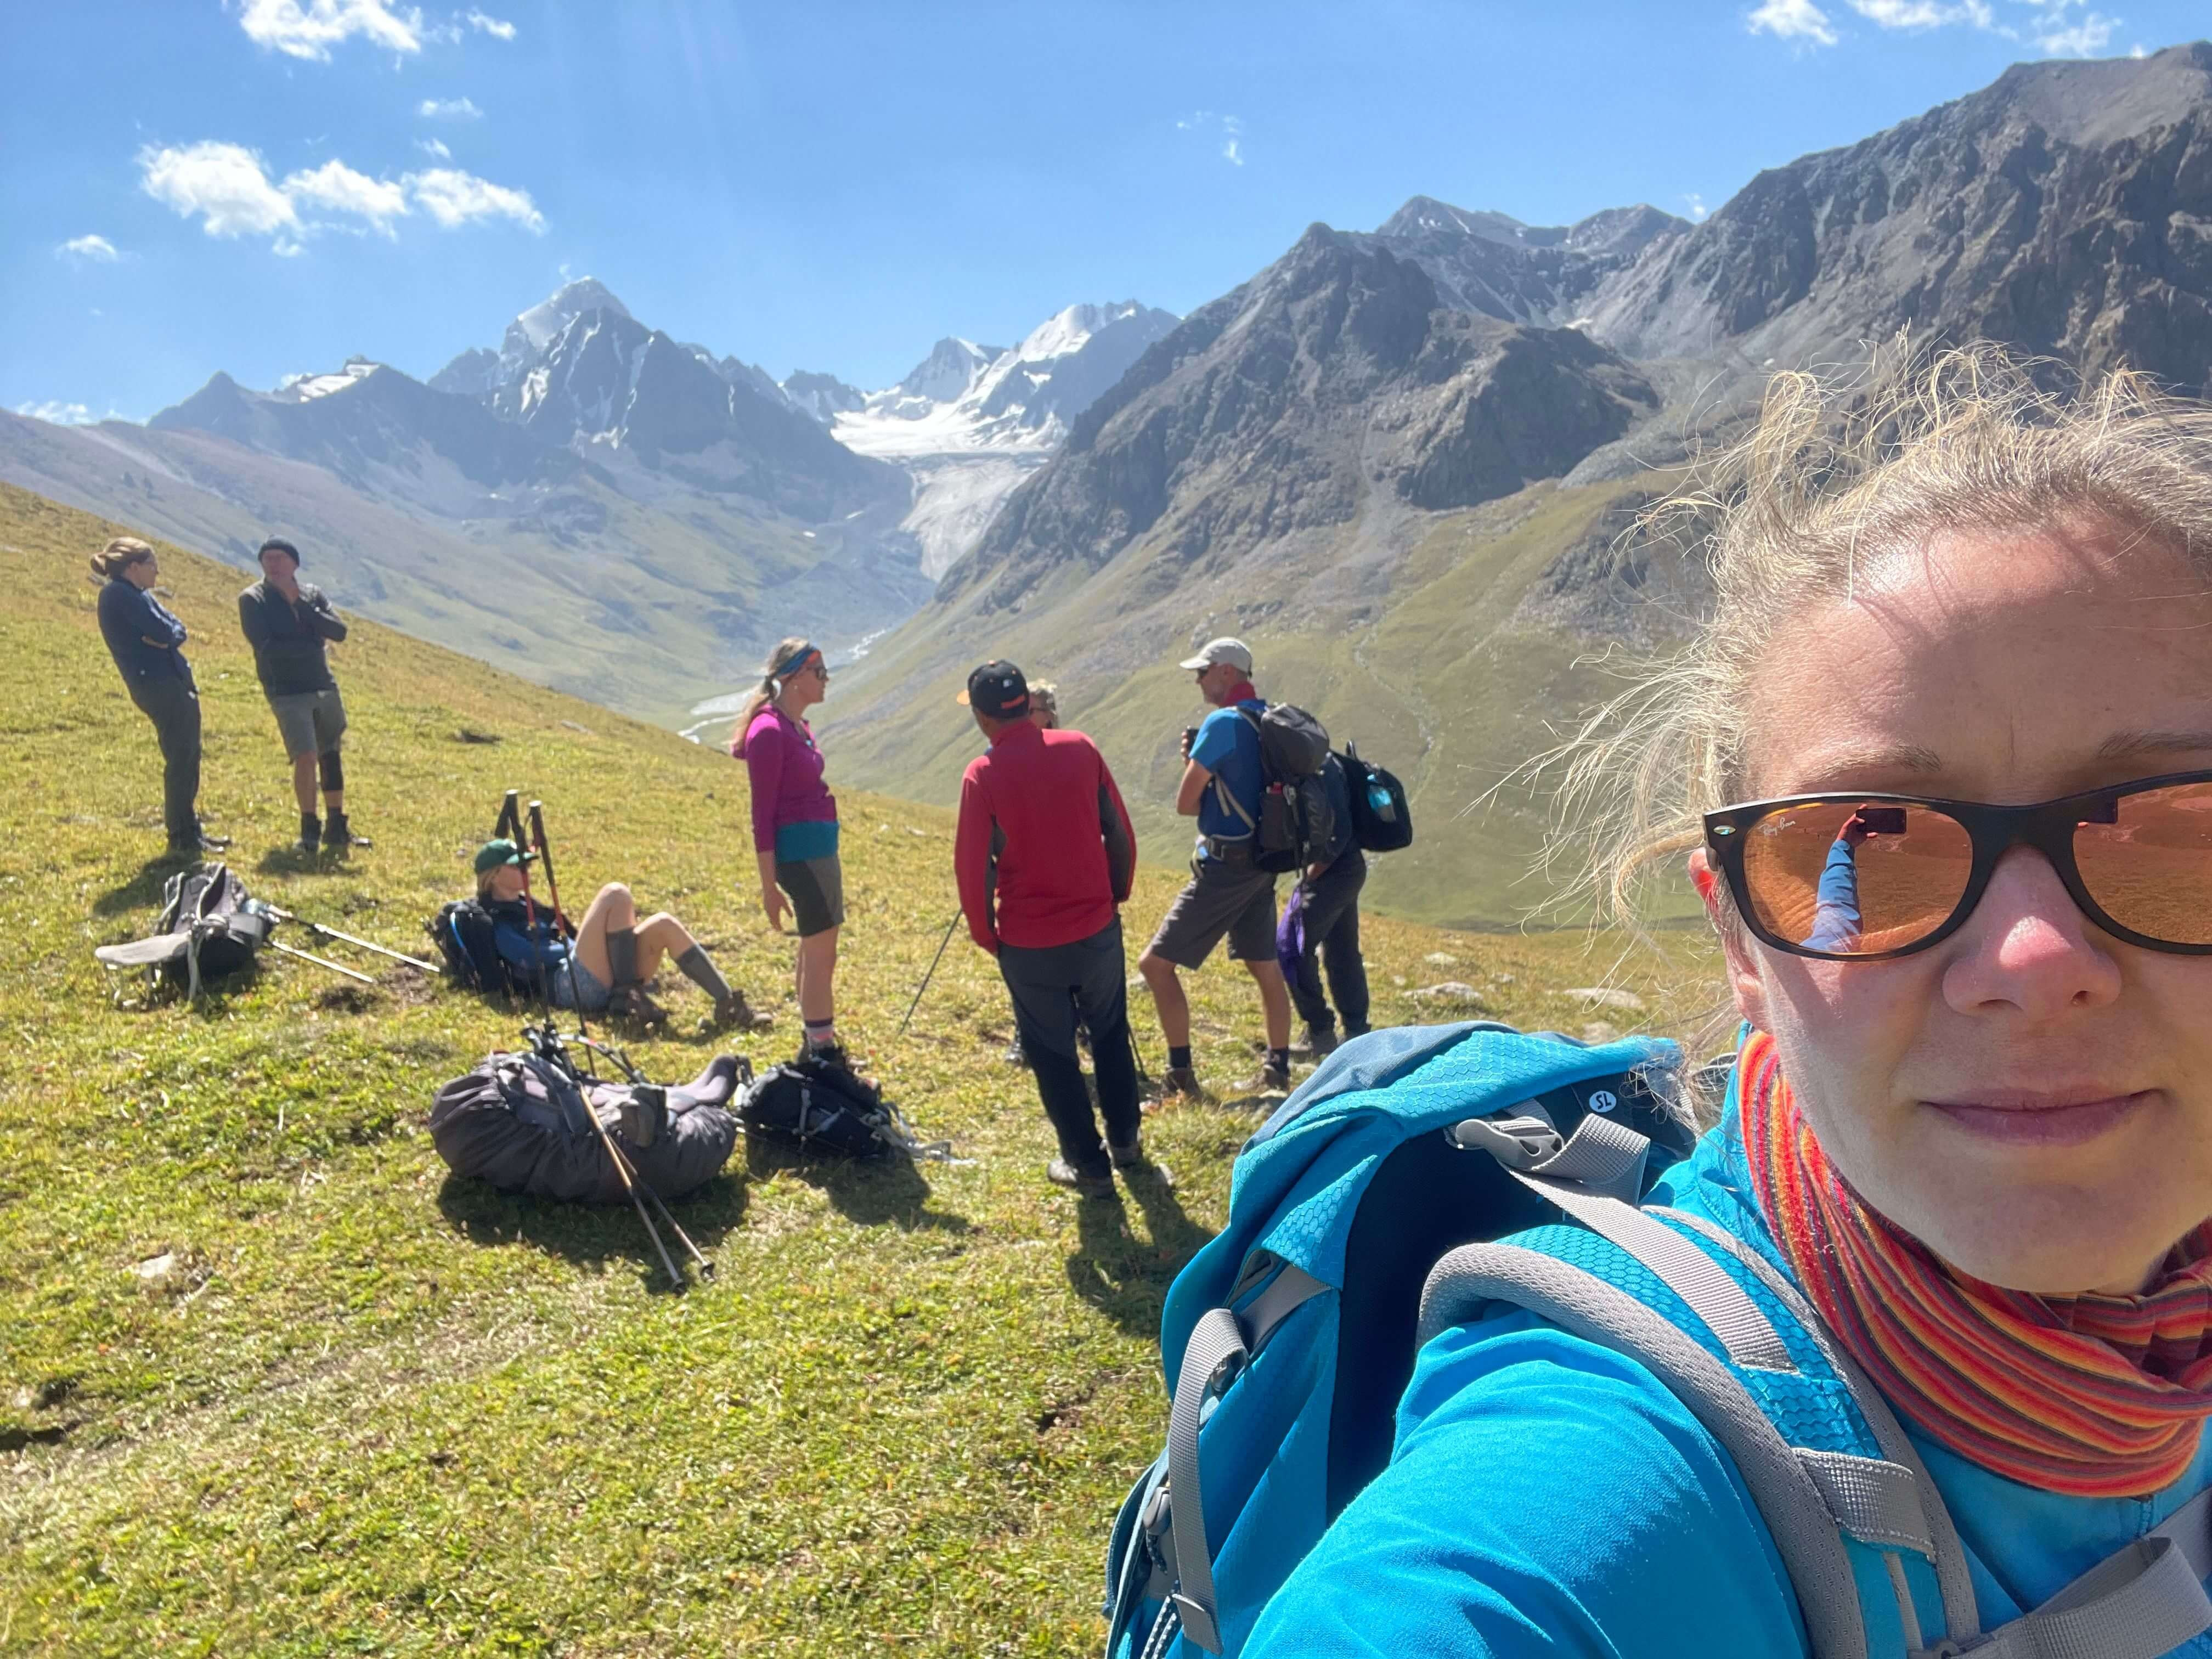 tourhub | YellowWood Adventures | Trek the wild Tian Shan Mountains of Kyrgyzstan | KYR-TS